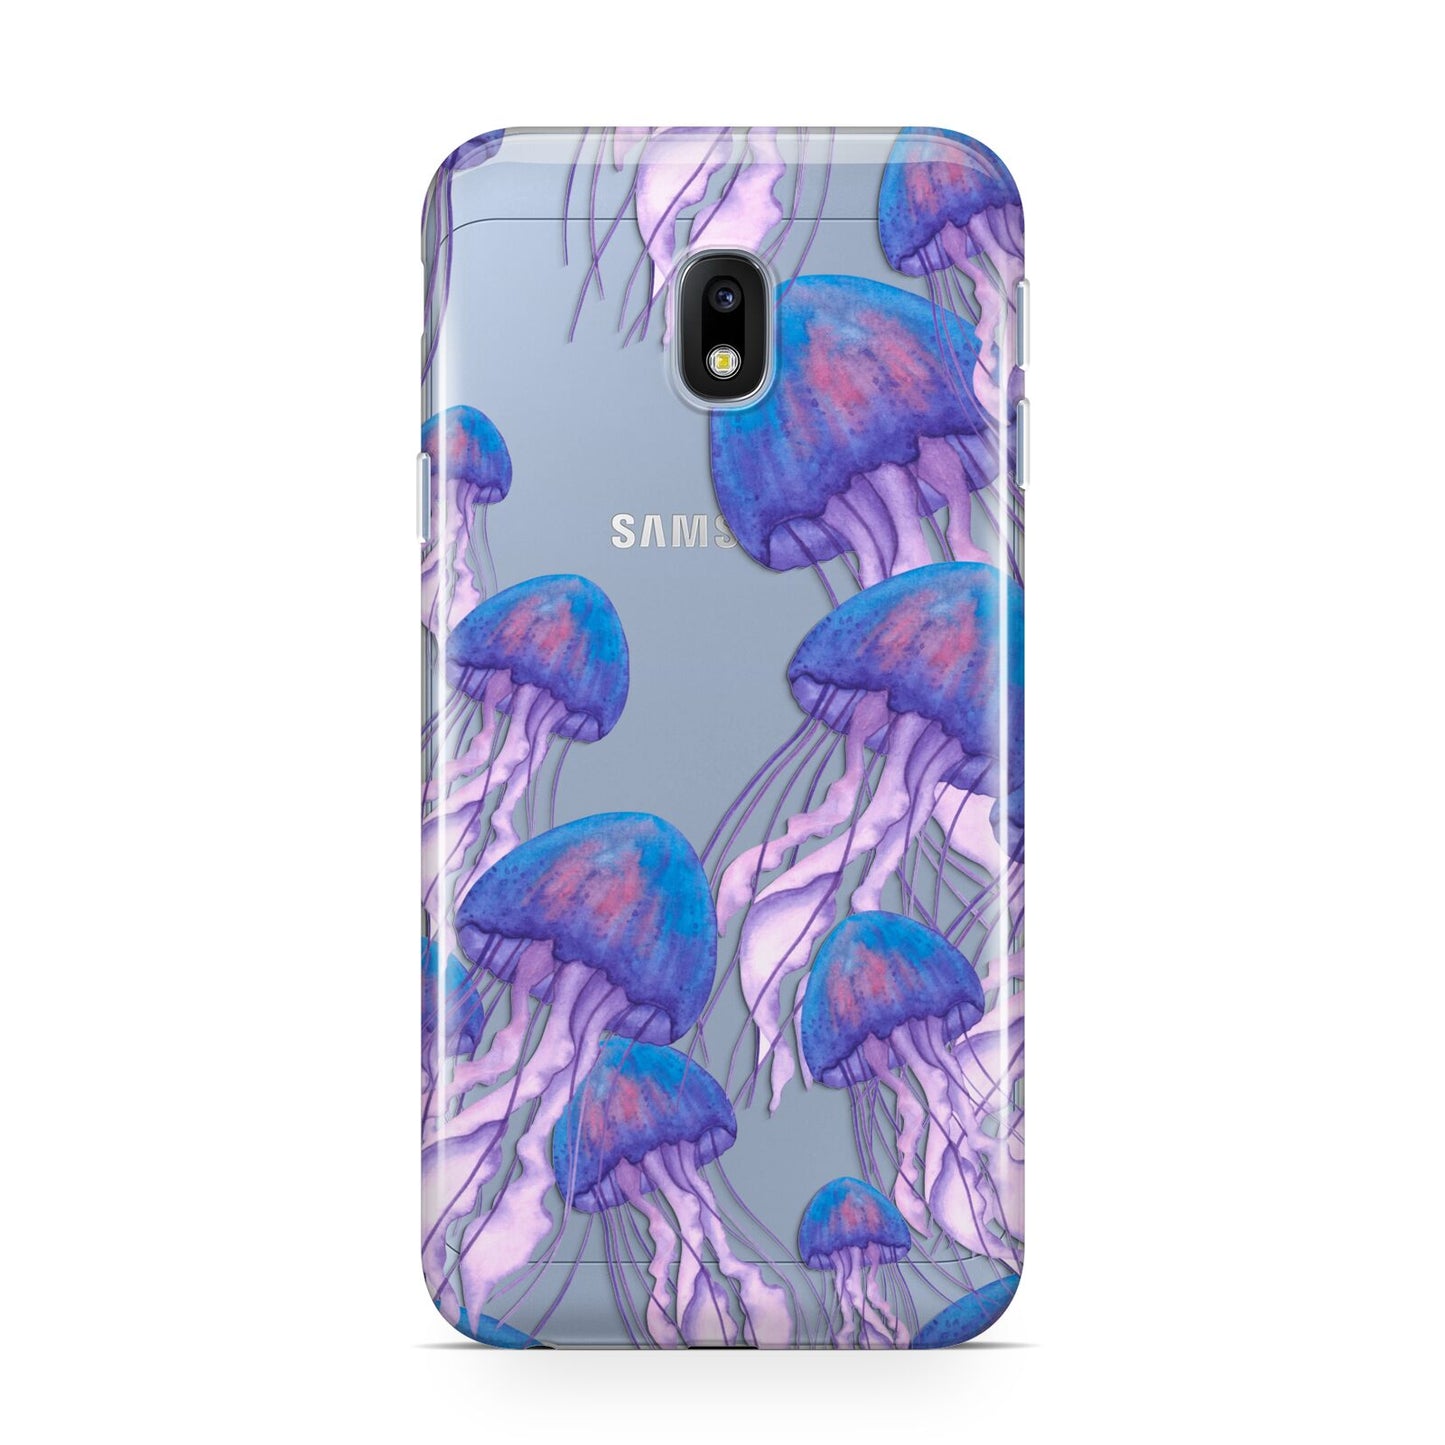 Jellyfish Samsung Galaxy J3 2017 Case